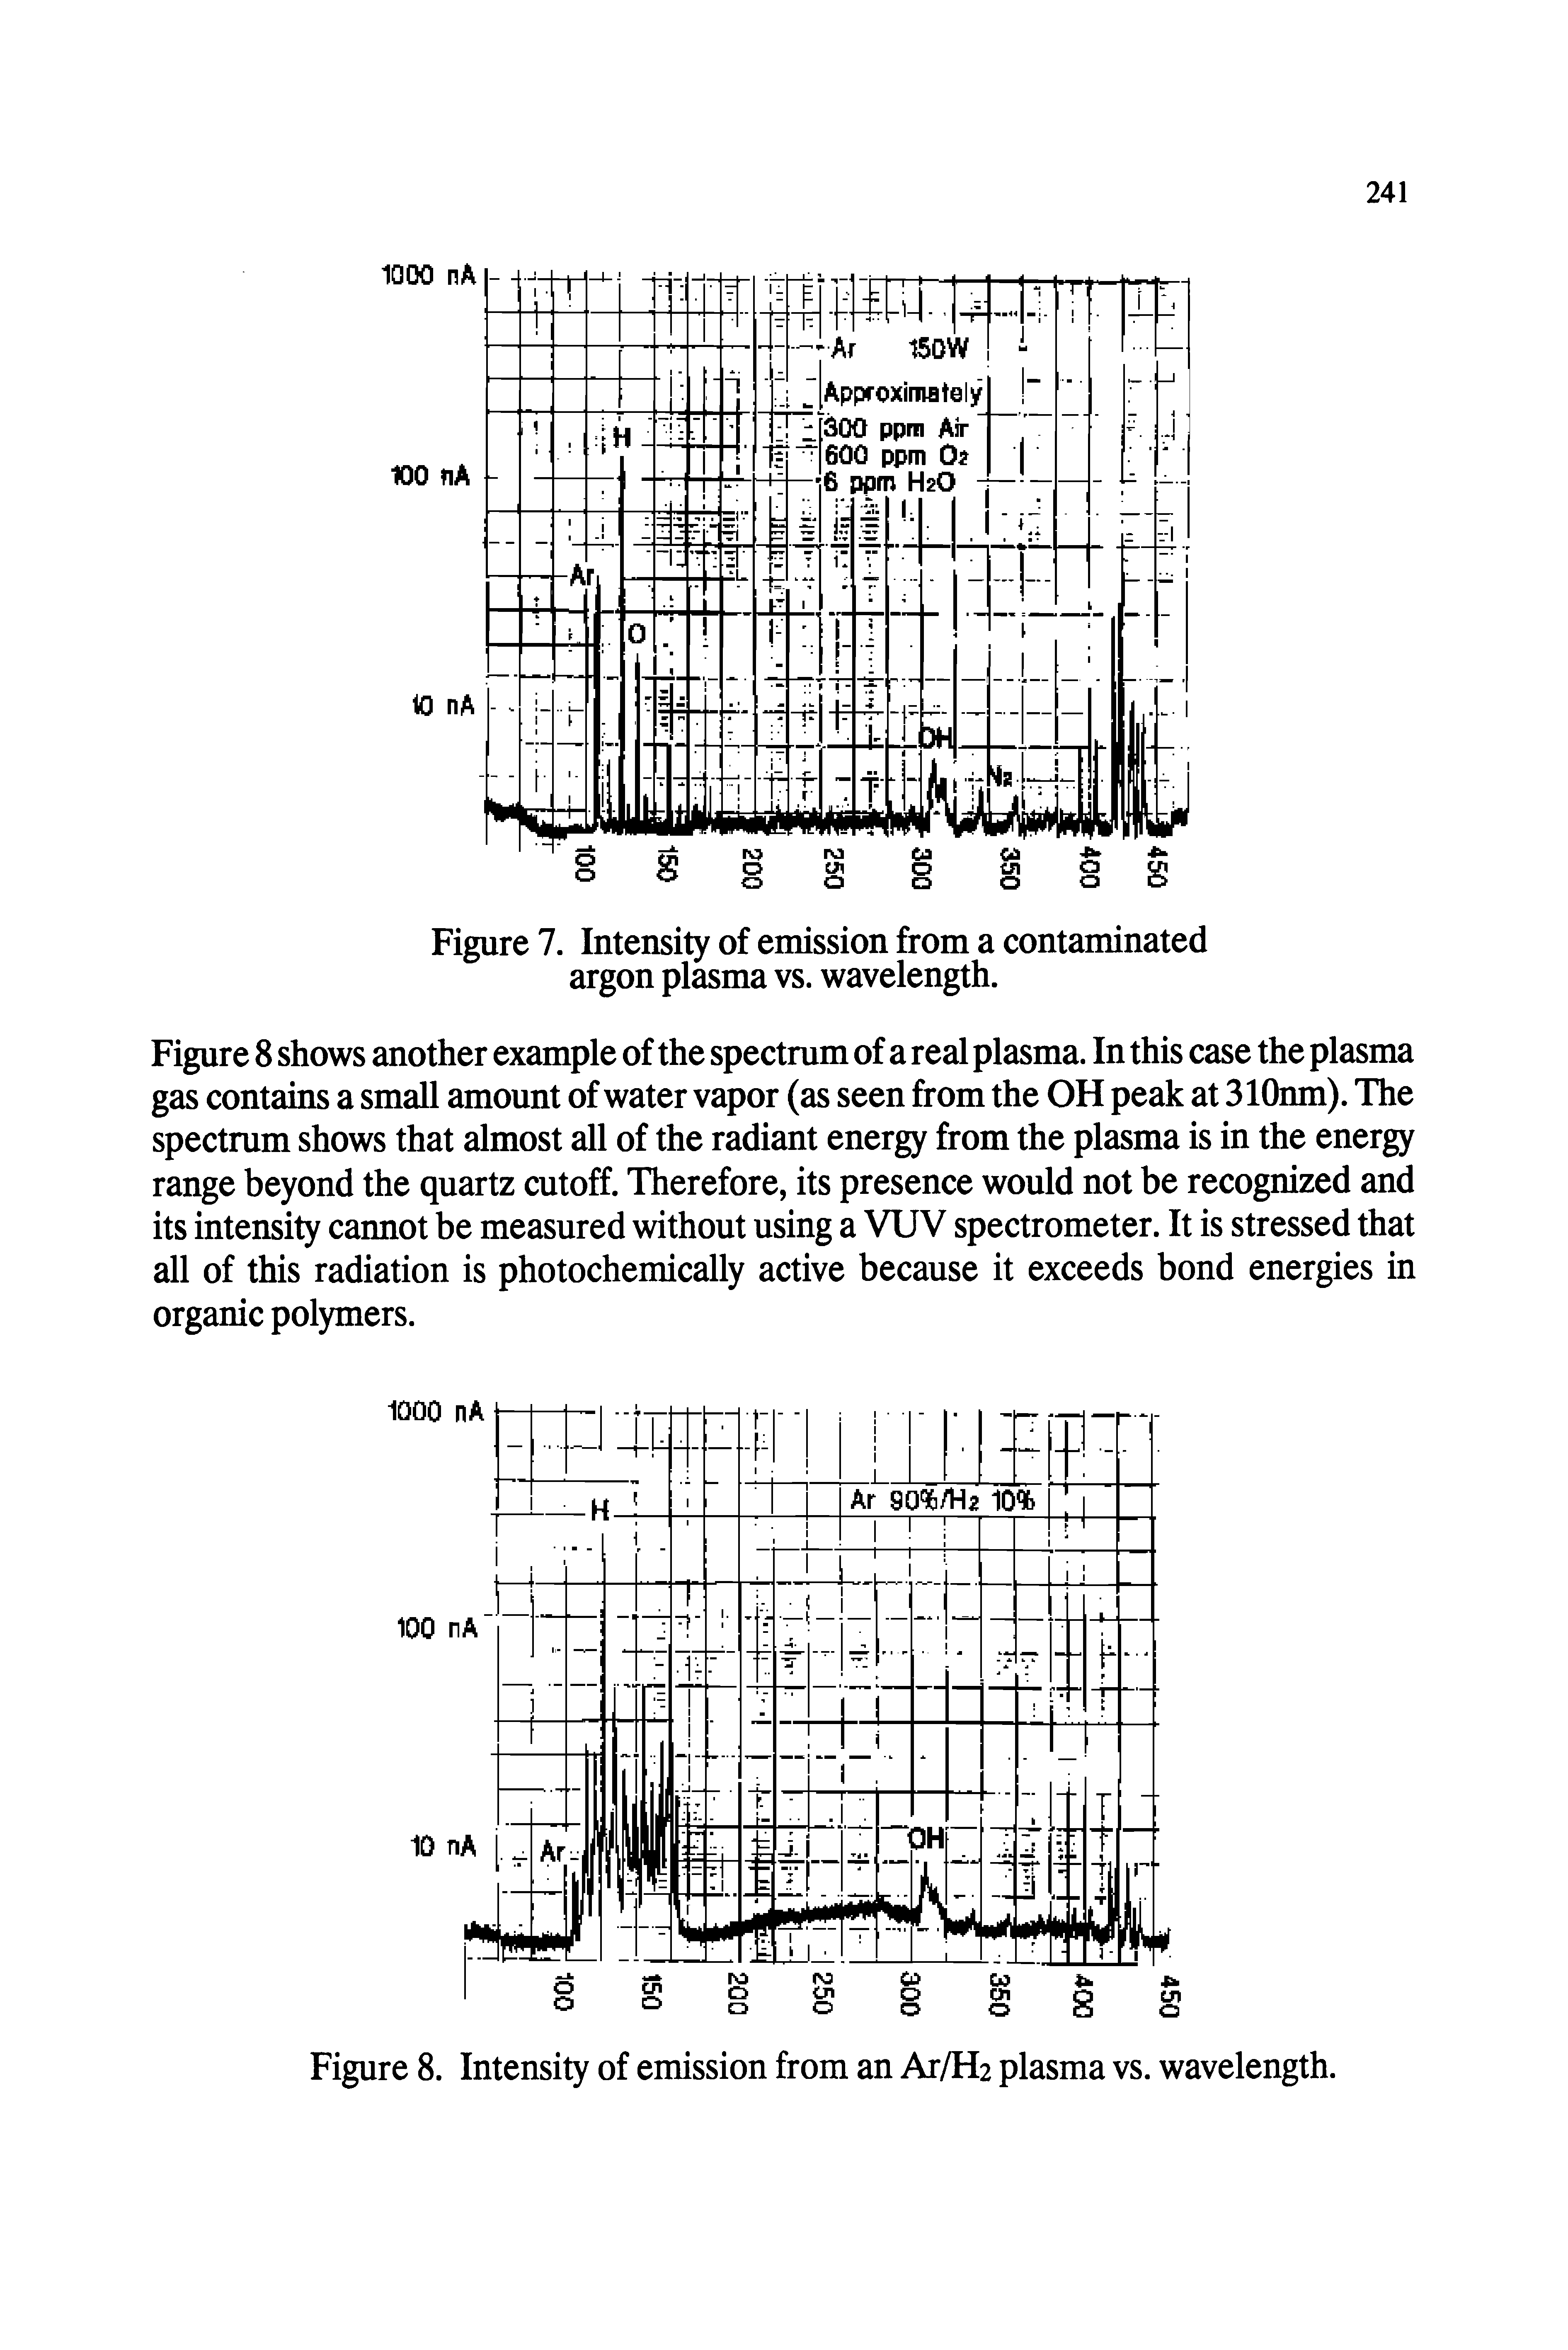 Figure 8. Intensity of emission from an Ar/H2 plasma vs. wavelength.